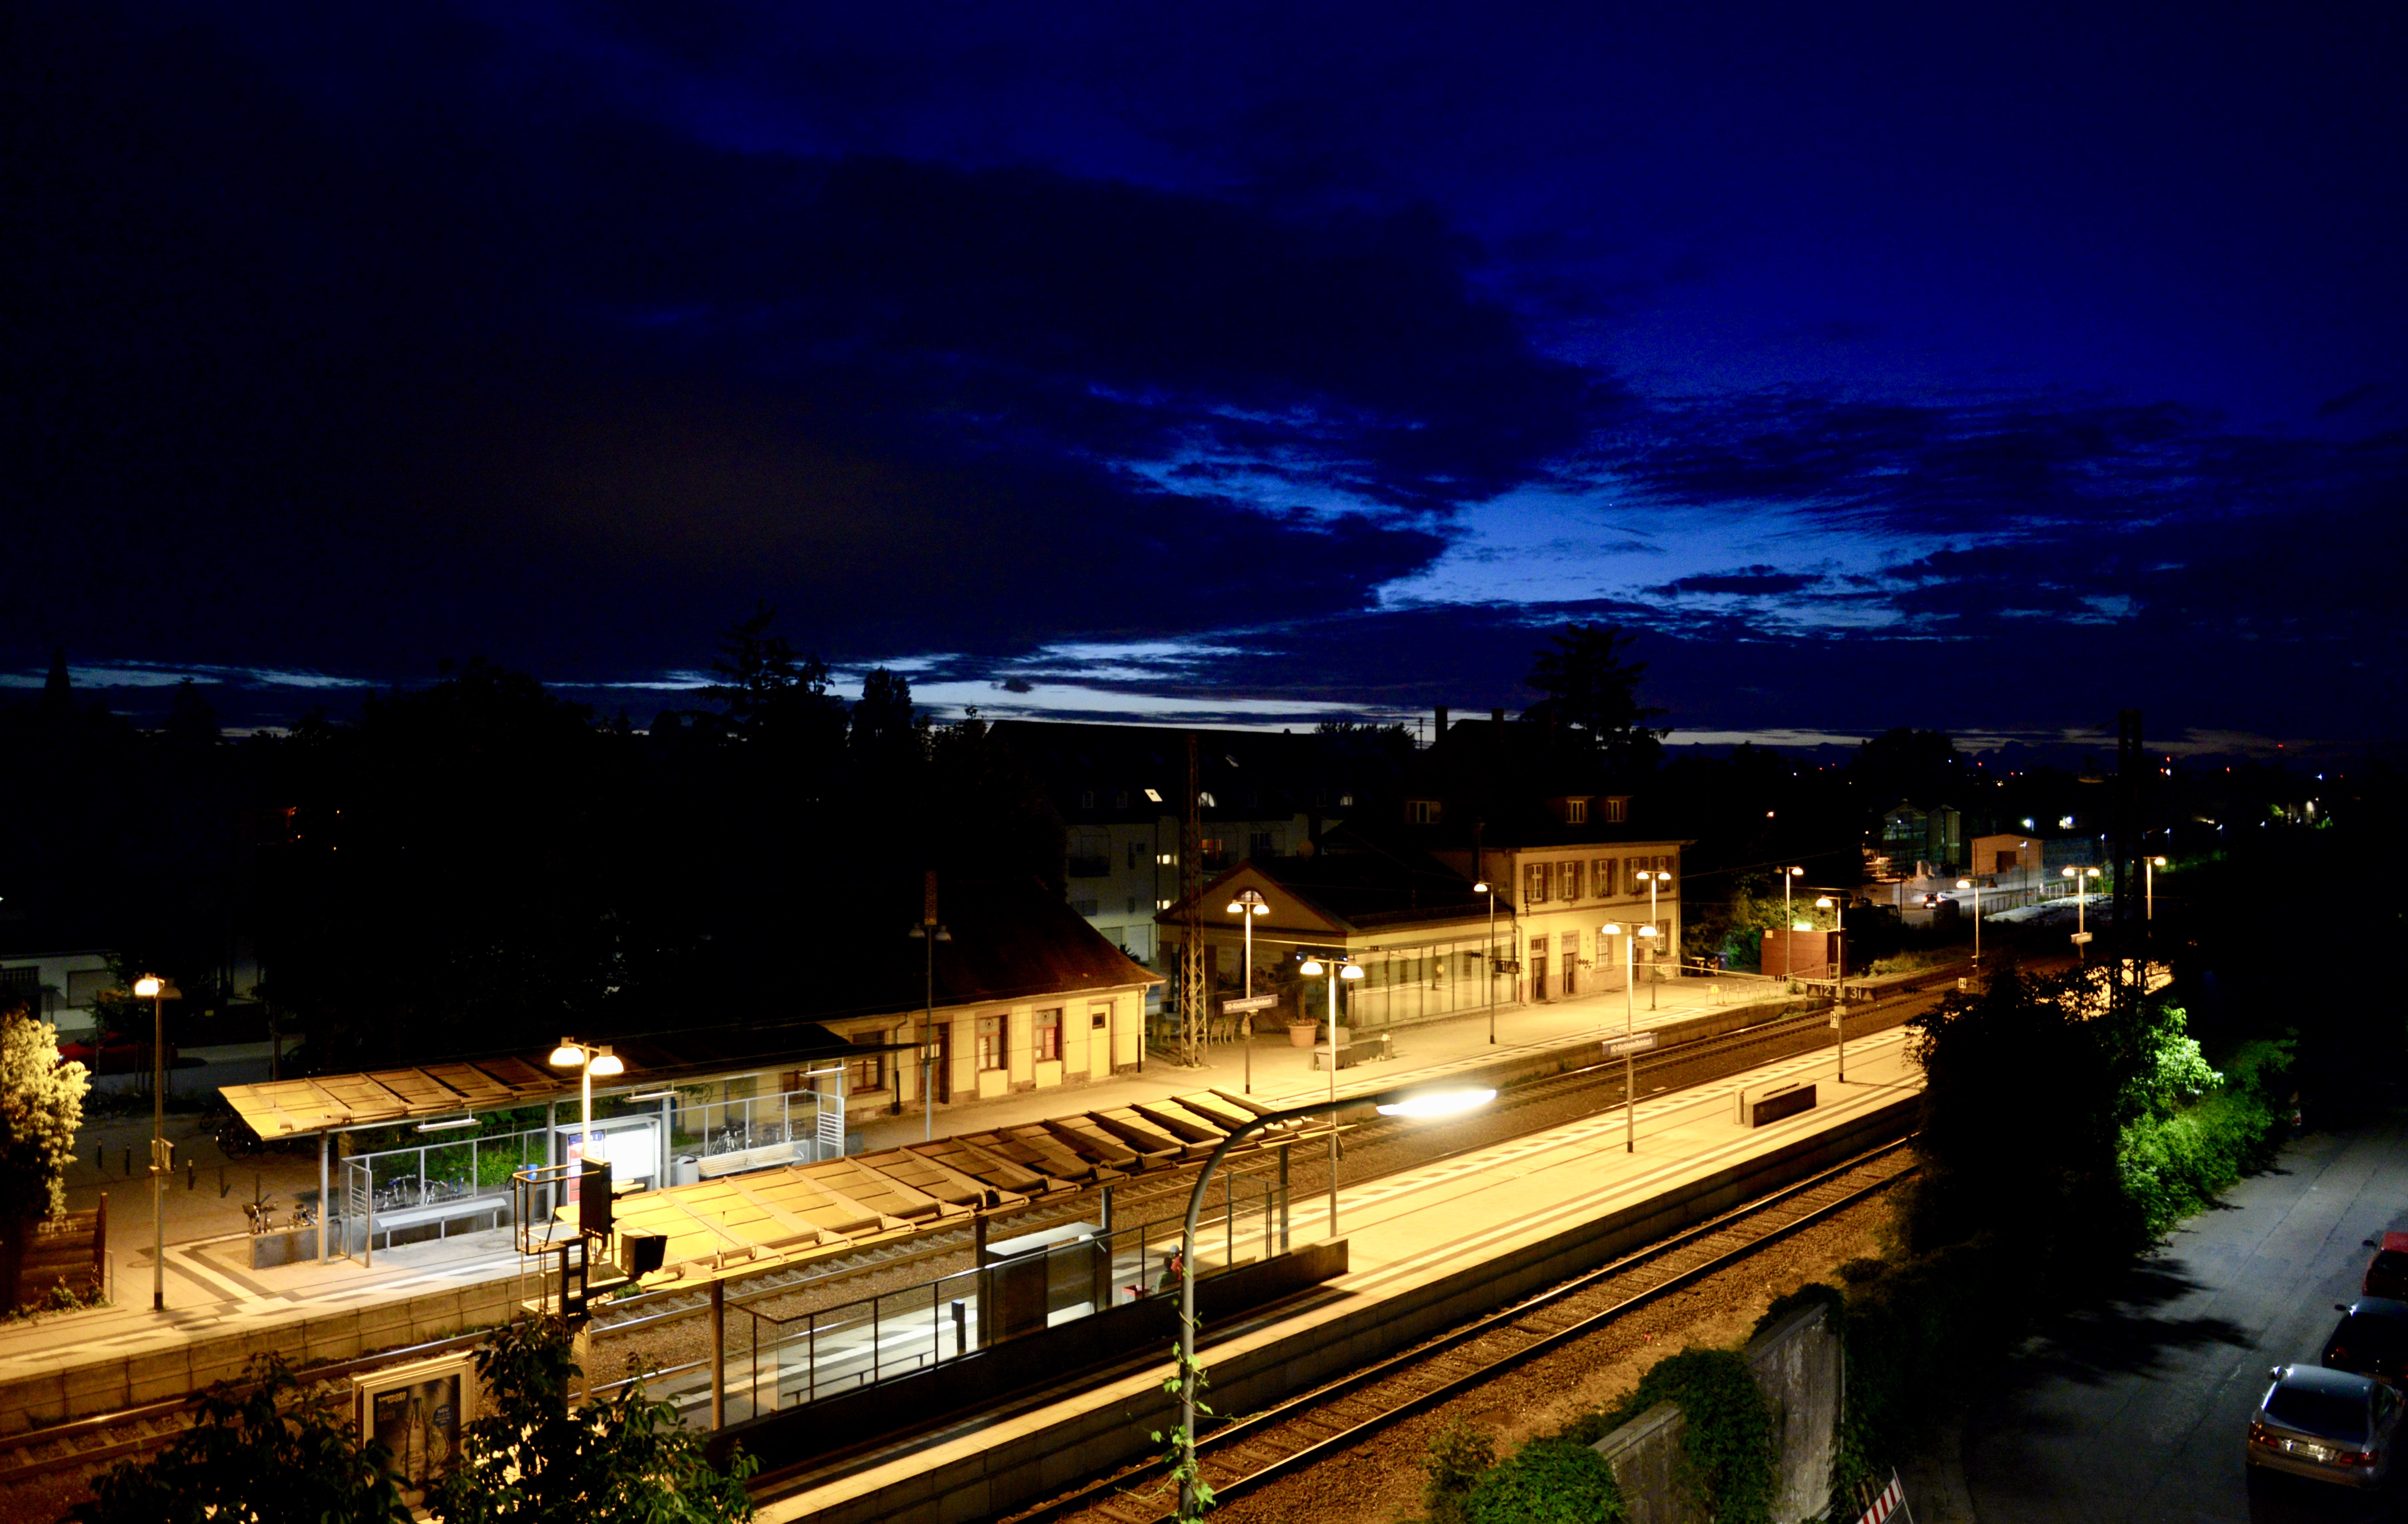 Bahnhof Kirchheim bei Nacht.jpg